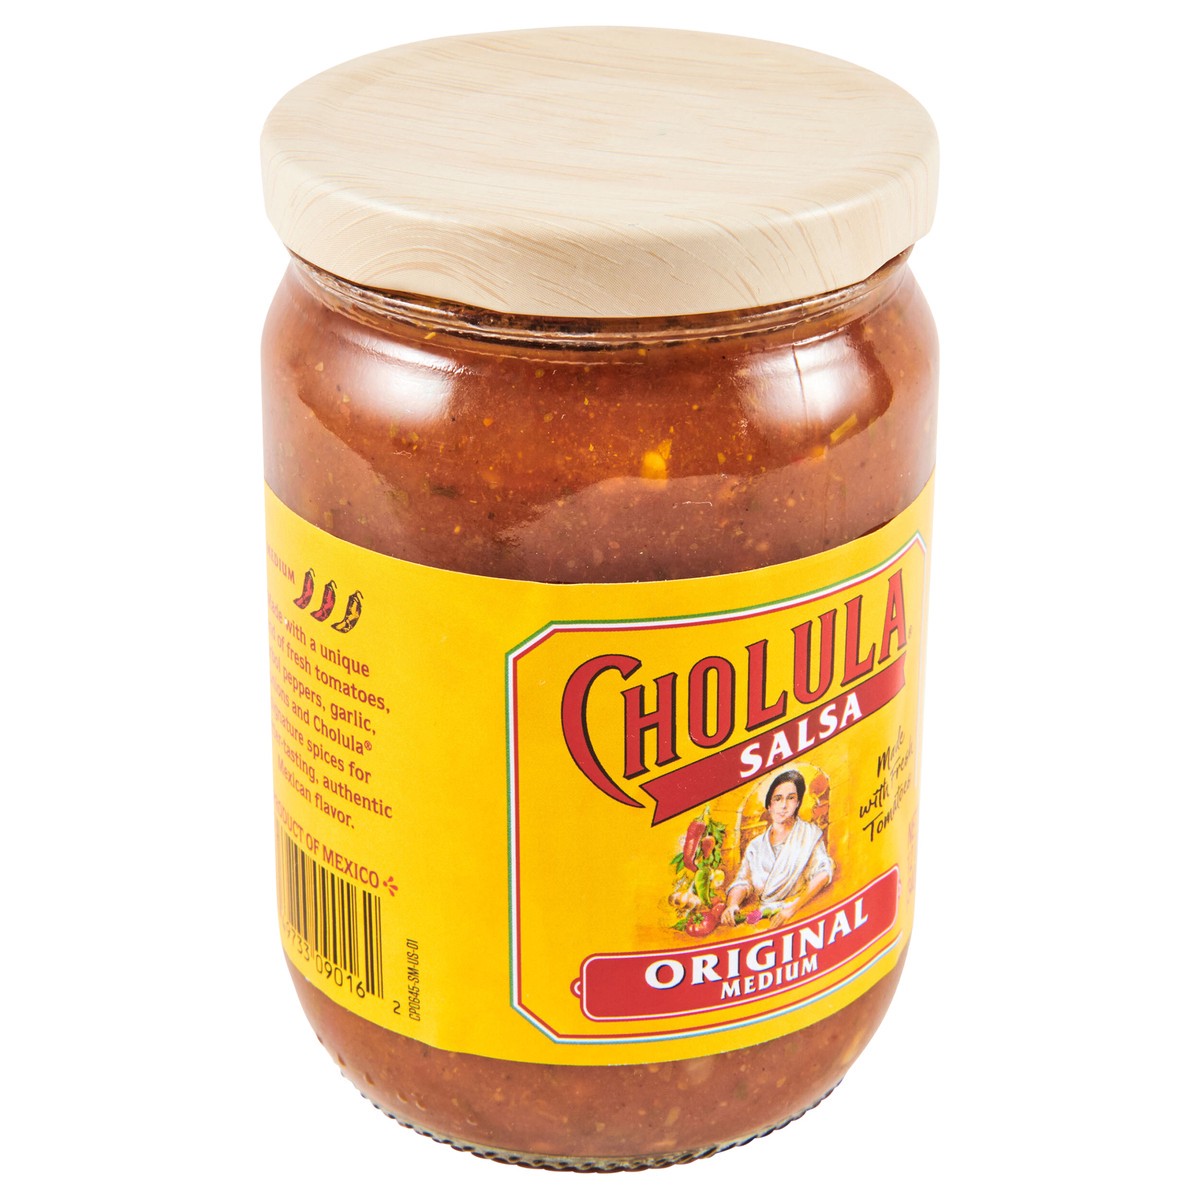 Cholula Original Hot Sauce with Wooden Topper, 12oz.